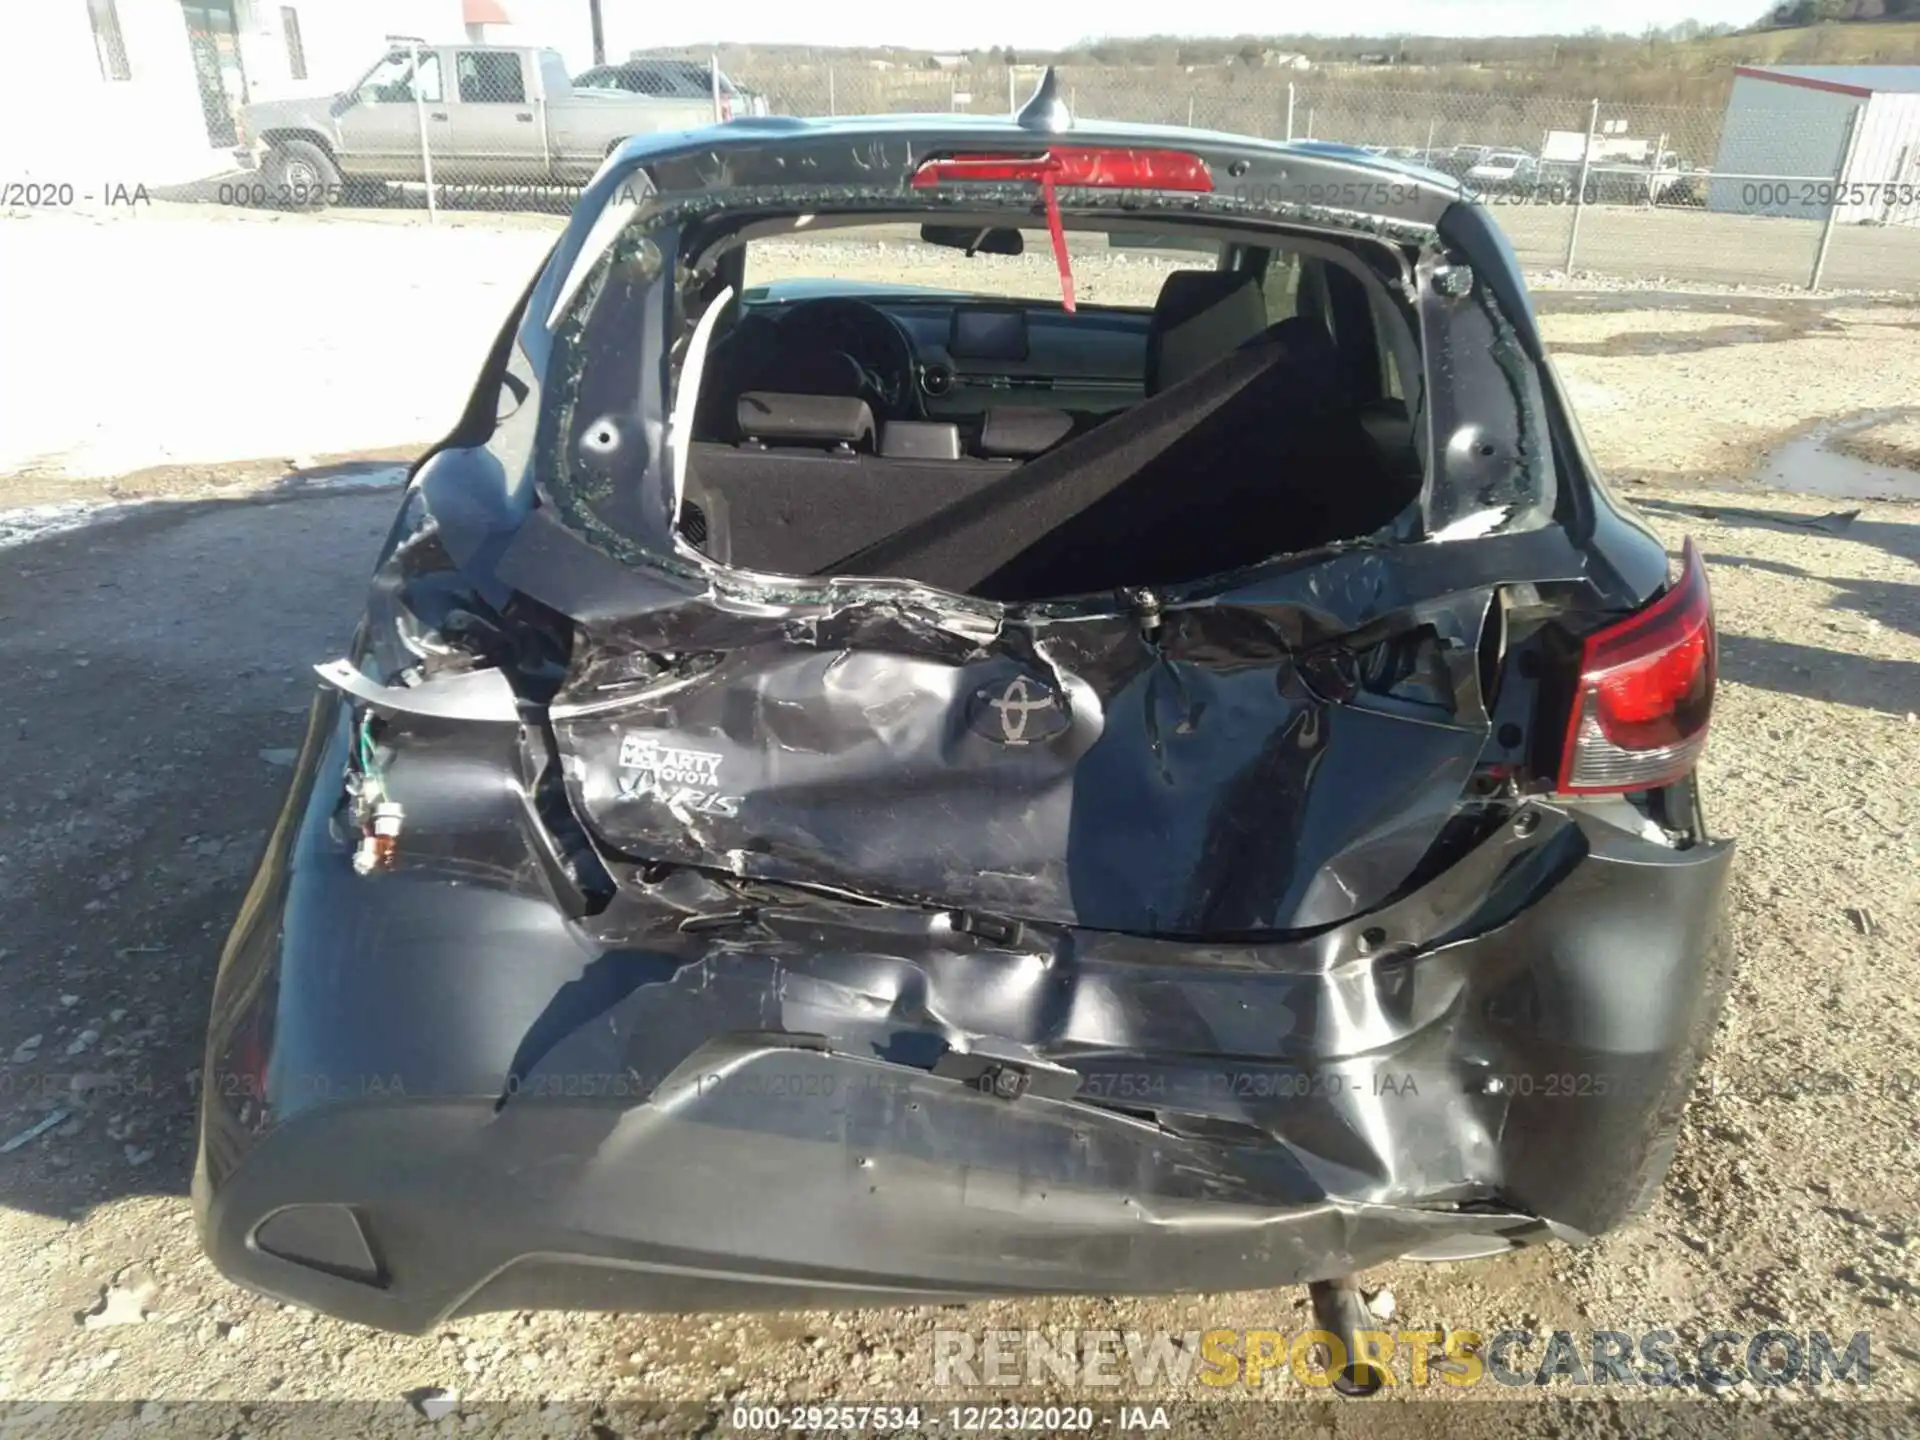 6 Photograph of a damaged car 3MYDLBJV2LY712228 TOYOTA YARIS HATCHBACK 2020